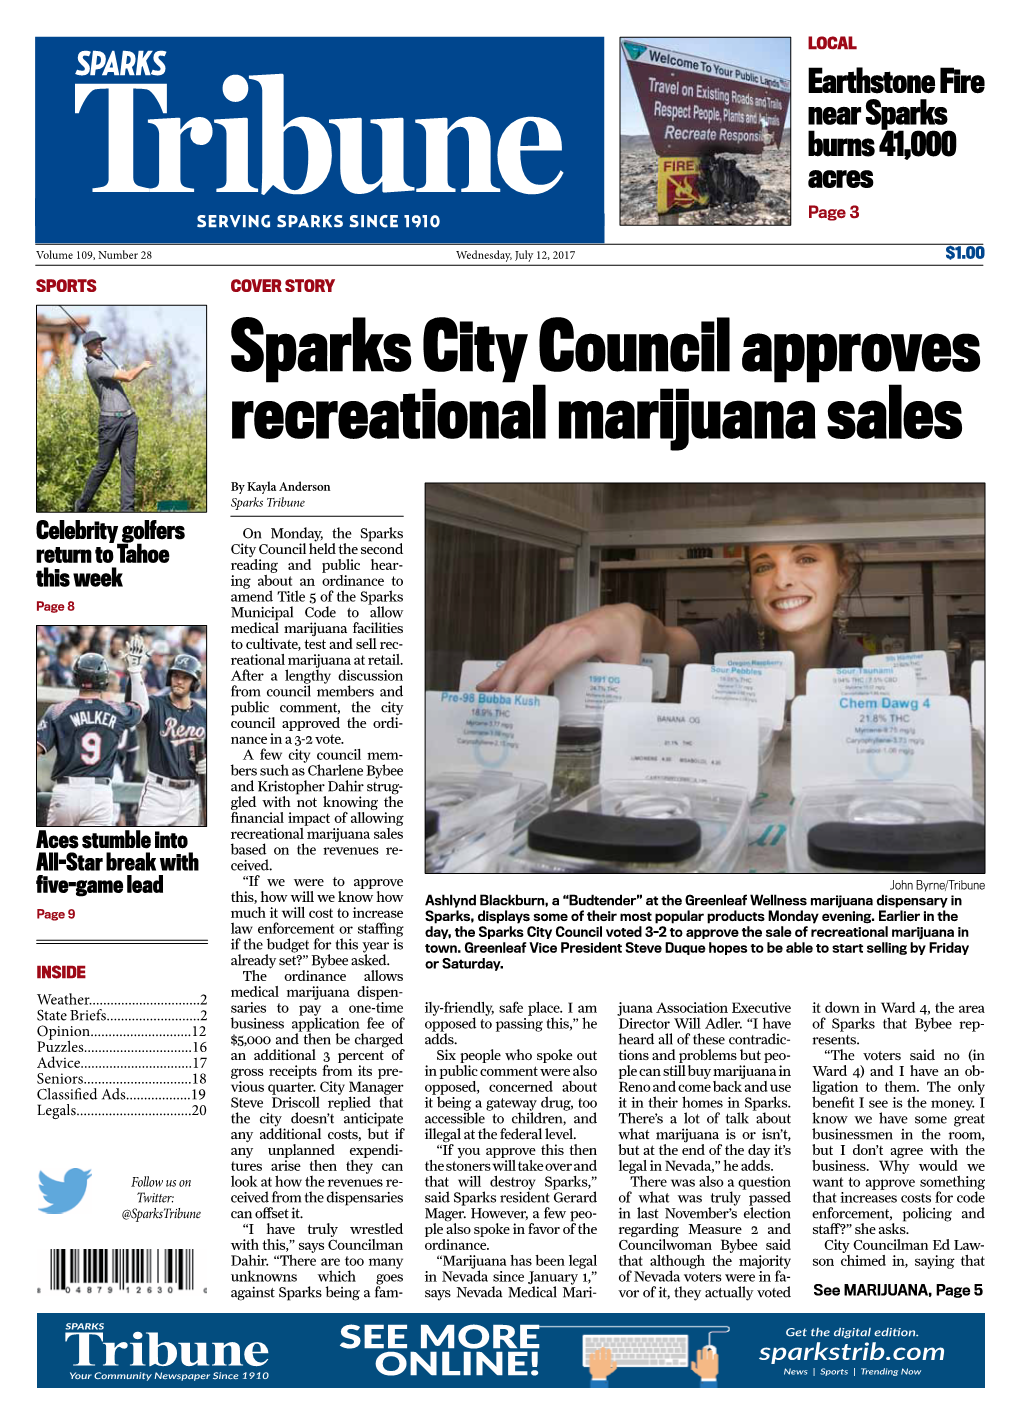 Sparks City Council Approves Recreational Marijuana Sales